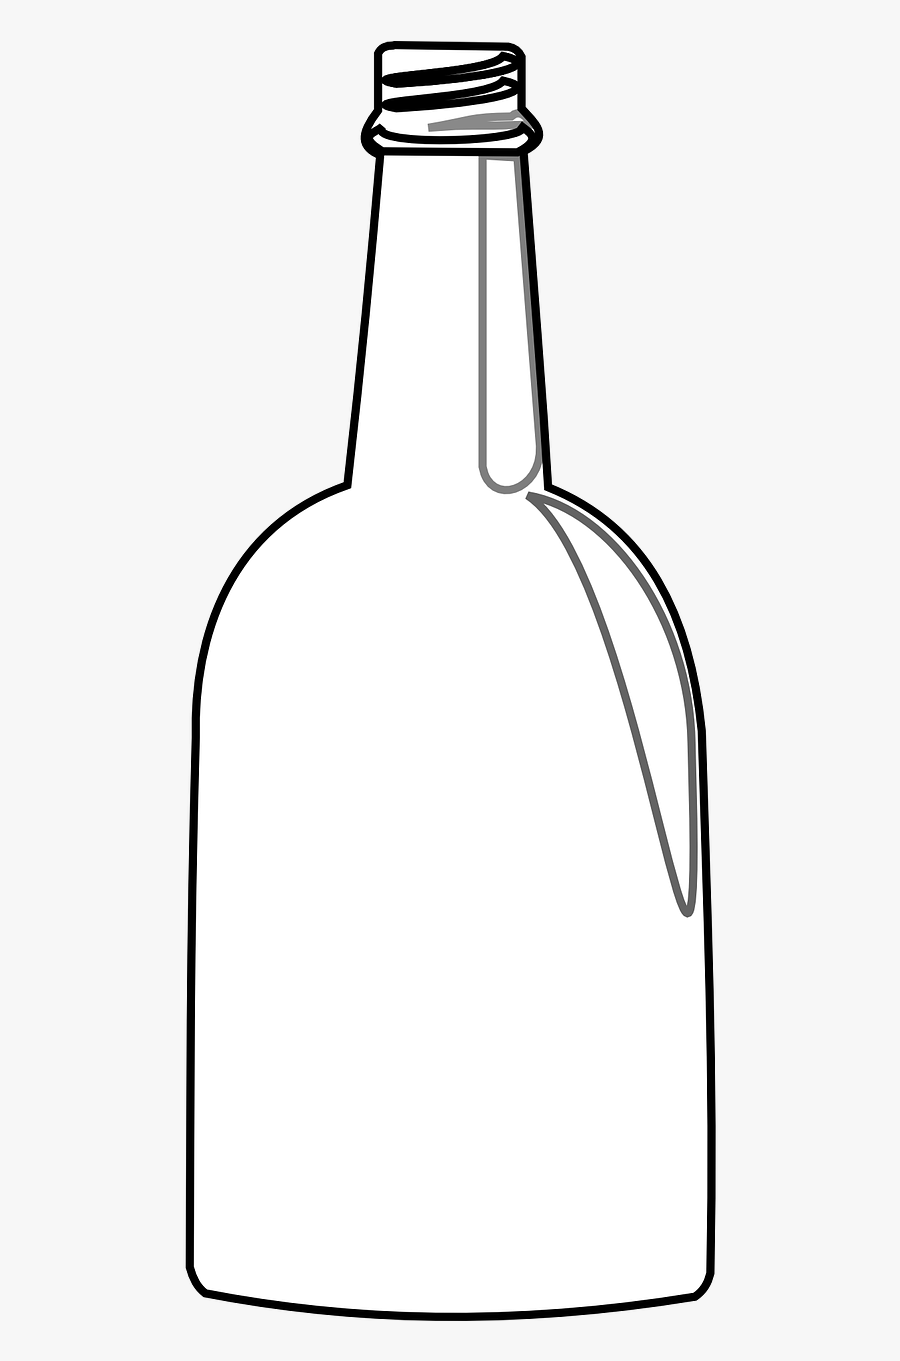 Transparent Wine Bottle Outline Png, Transparent Clipart